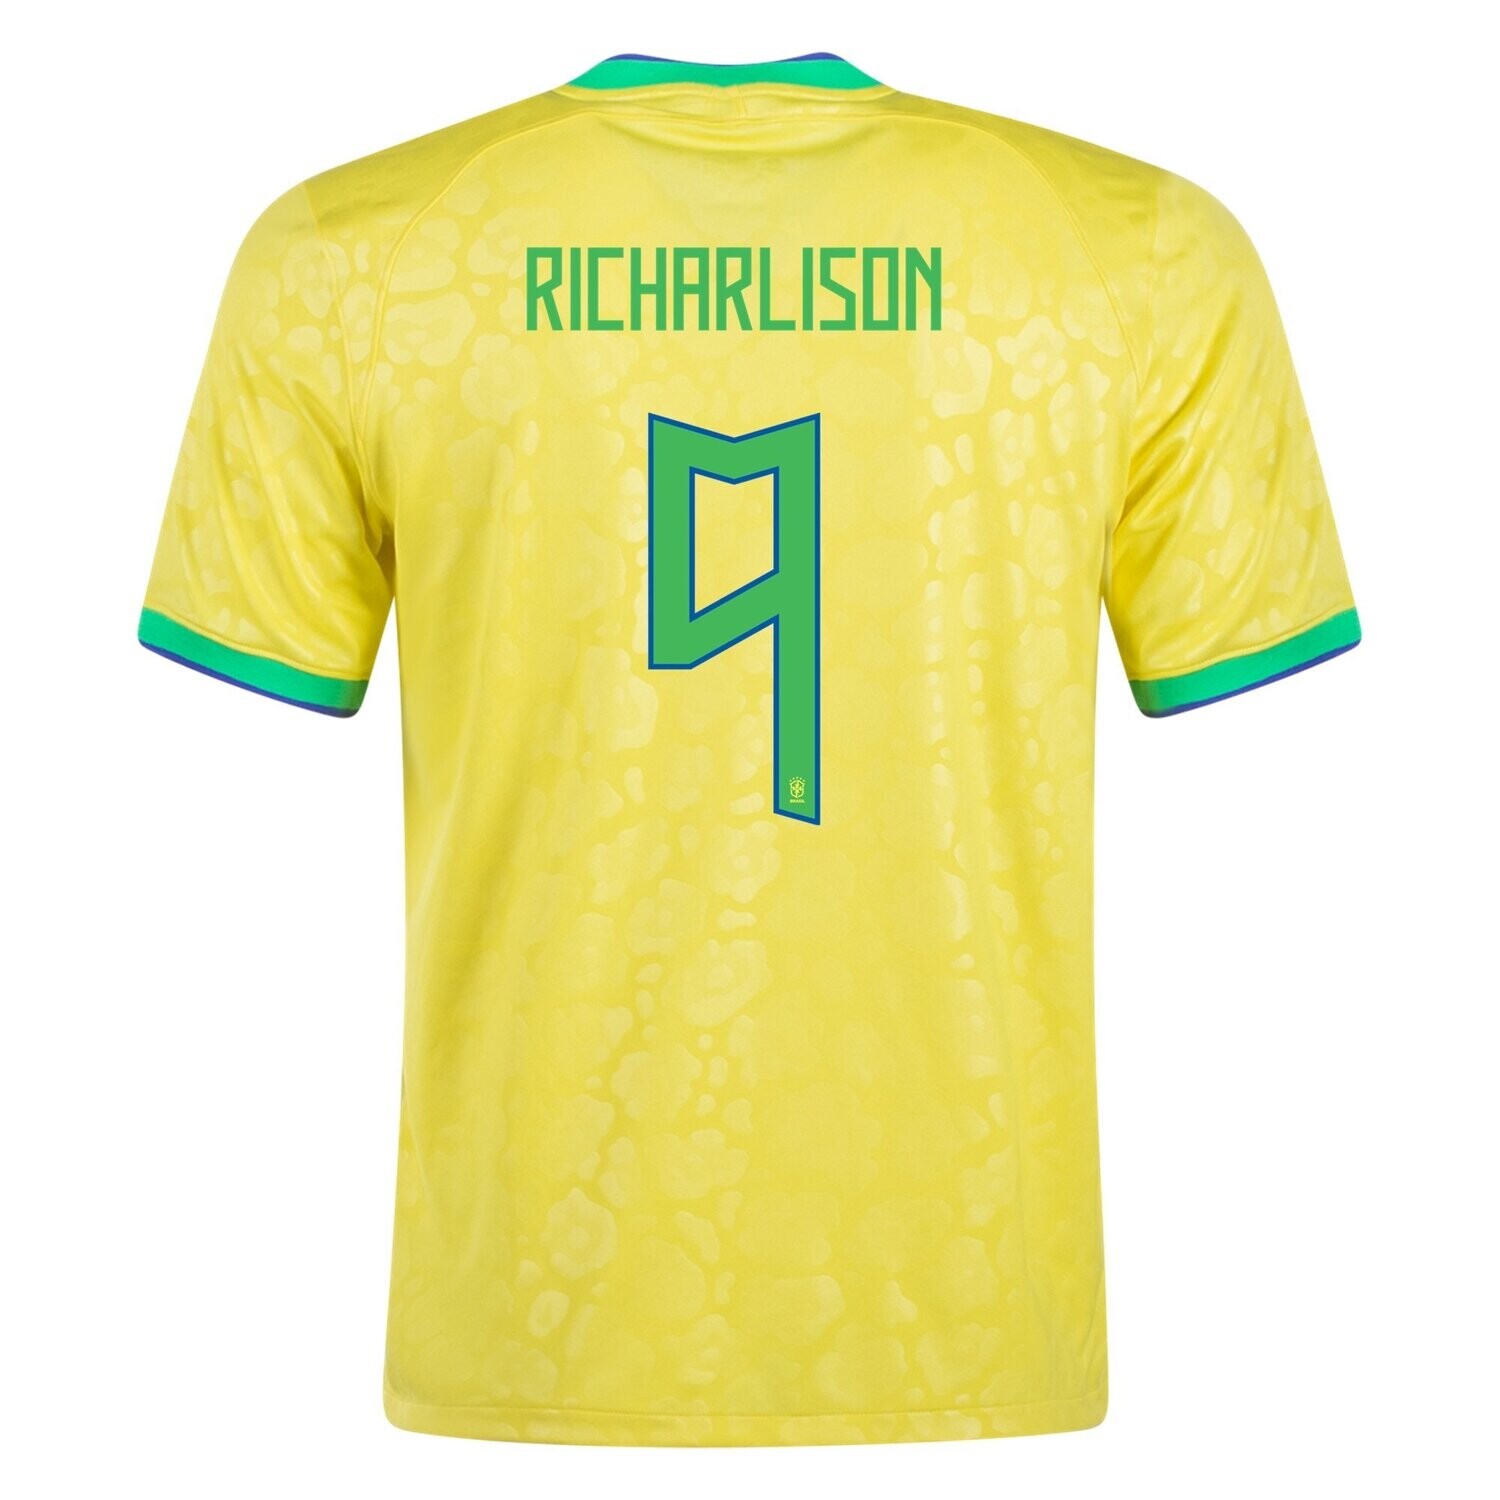 Richarlison Brazil World Cup Home Soccer Jersey 2022